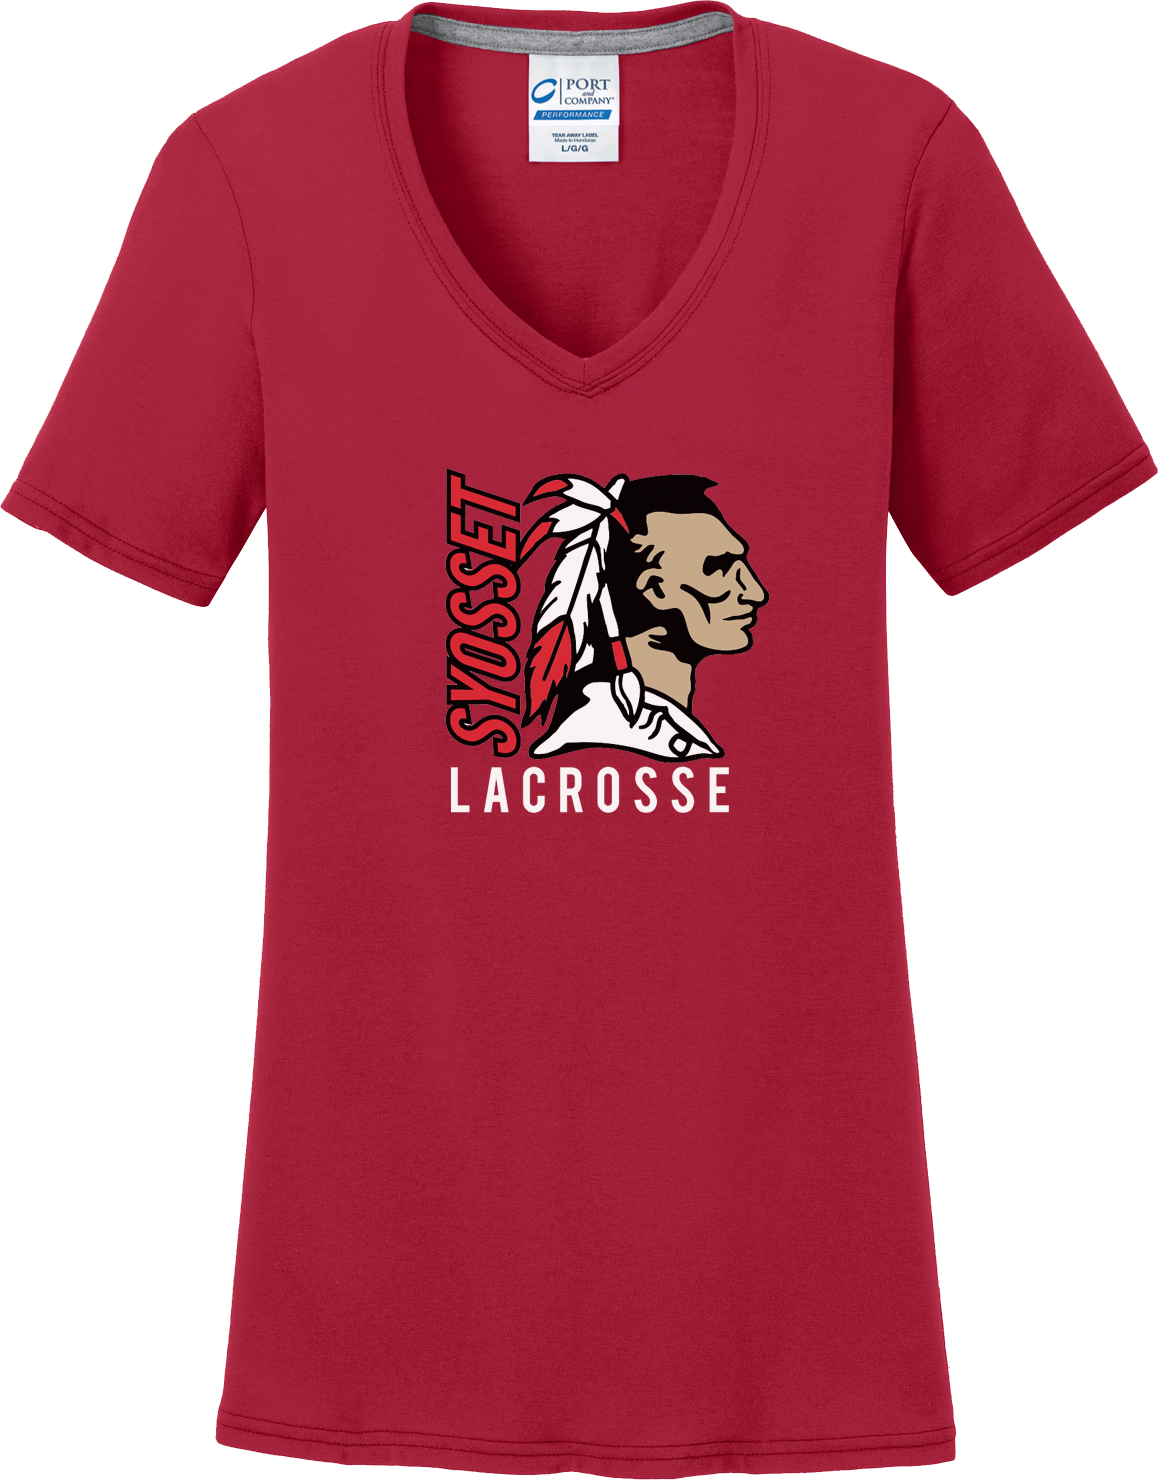 Syosset Lacrosse Women's Red T-Shirt